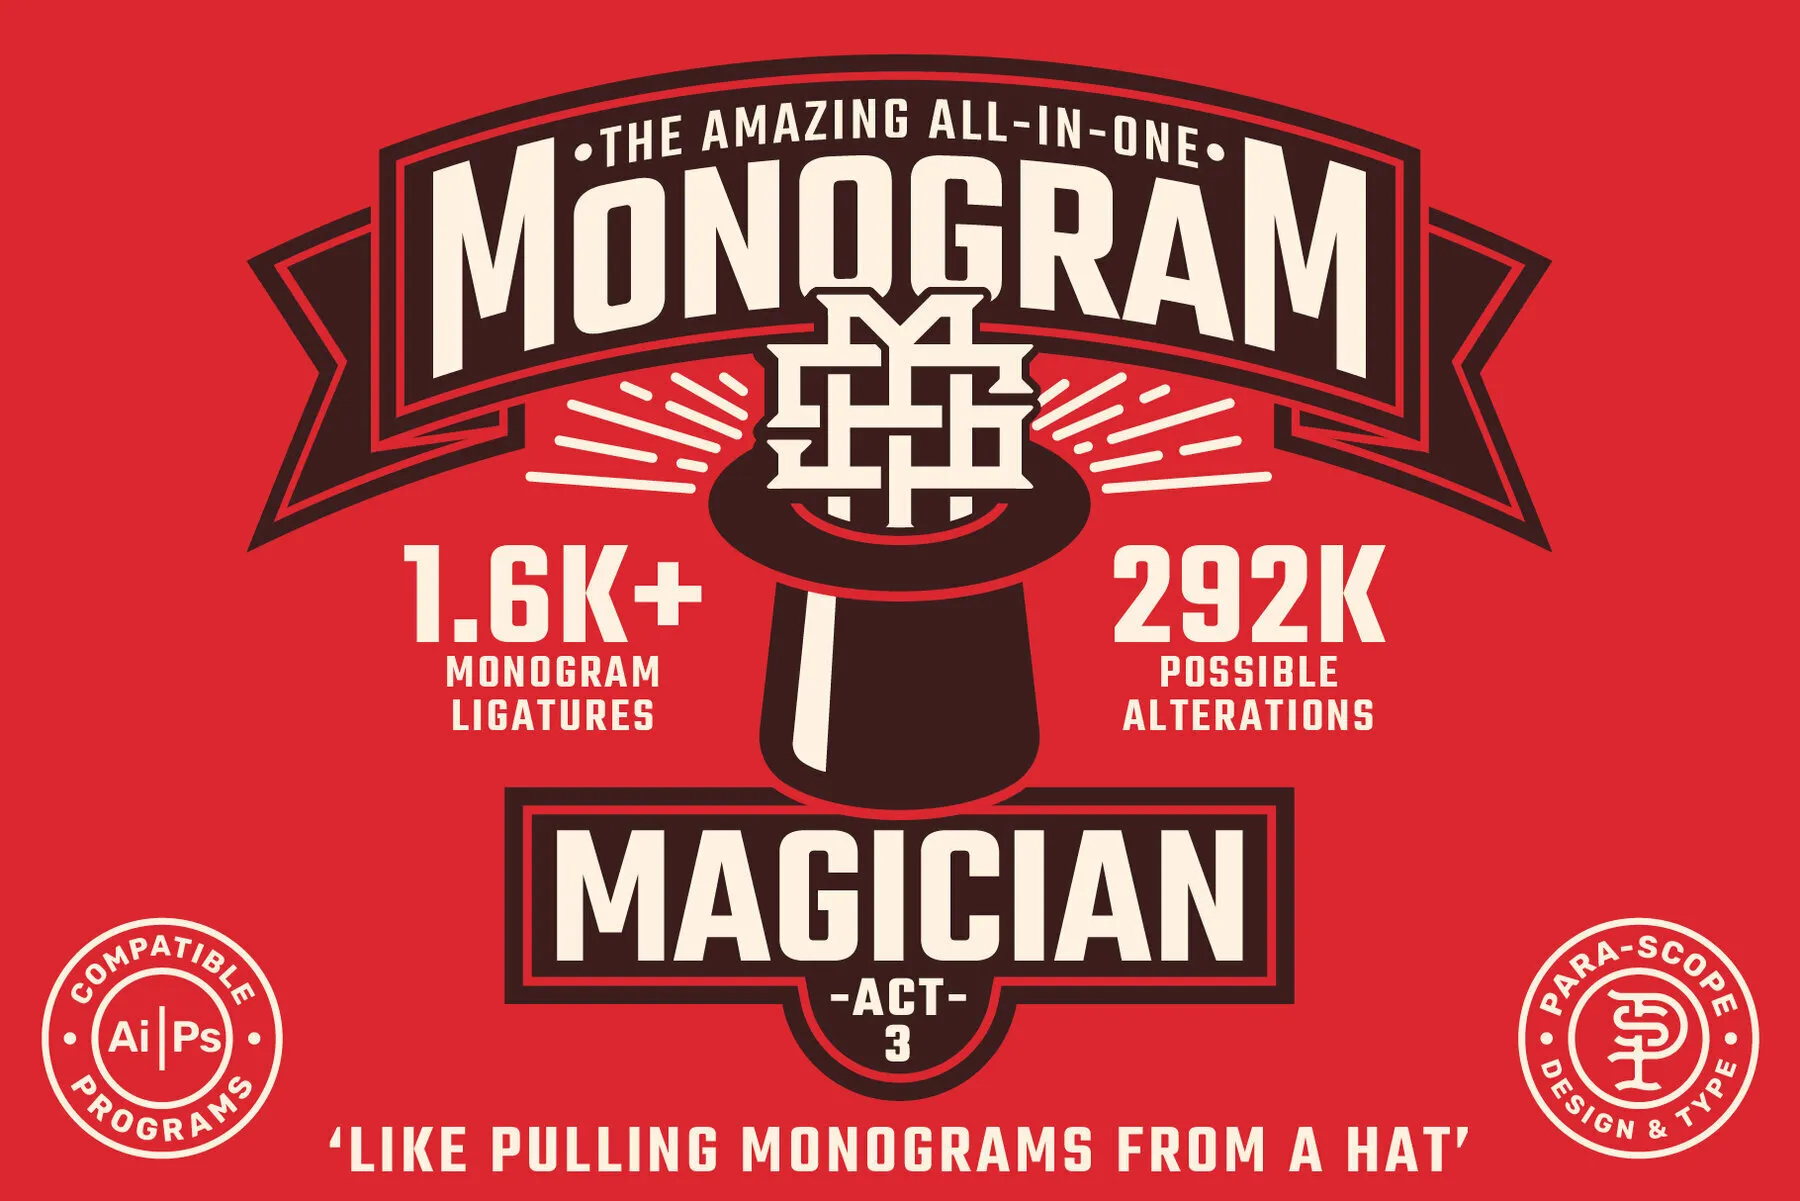 MONOGRAM MAGICIAN - ACT 3